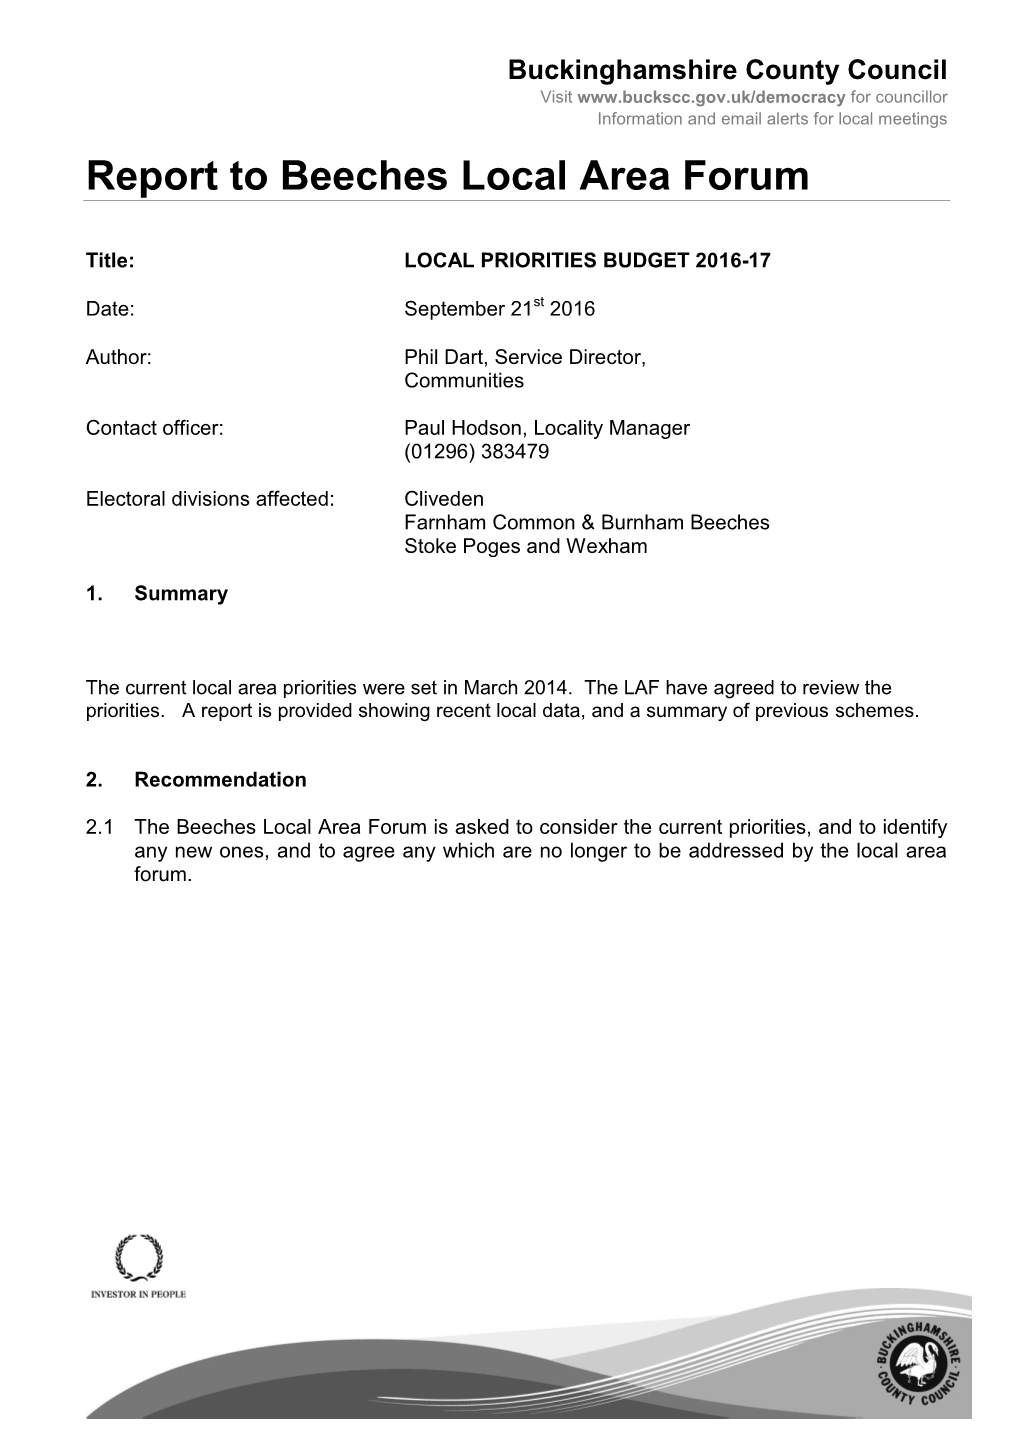 Local Priorities Refresh Beeches LAF PDF 168 KB